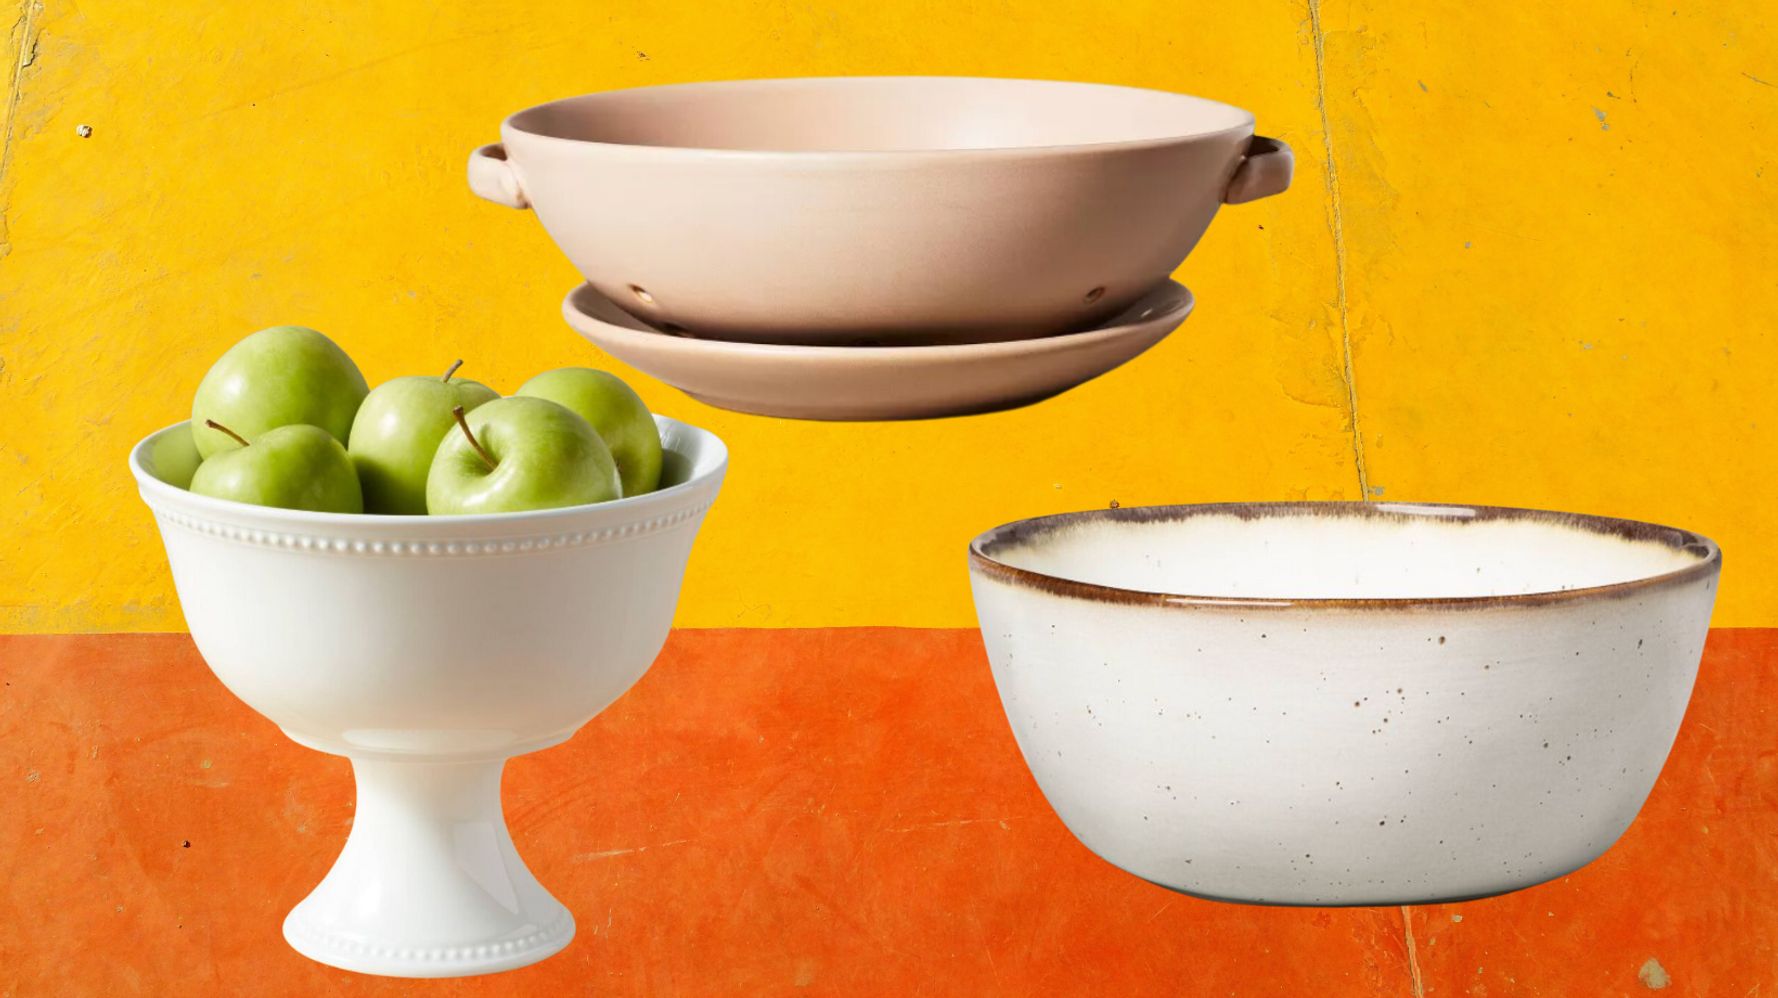 Set of Vintage-Inspired Mixing Bowls - Magnolia